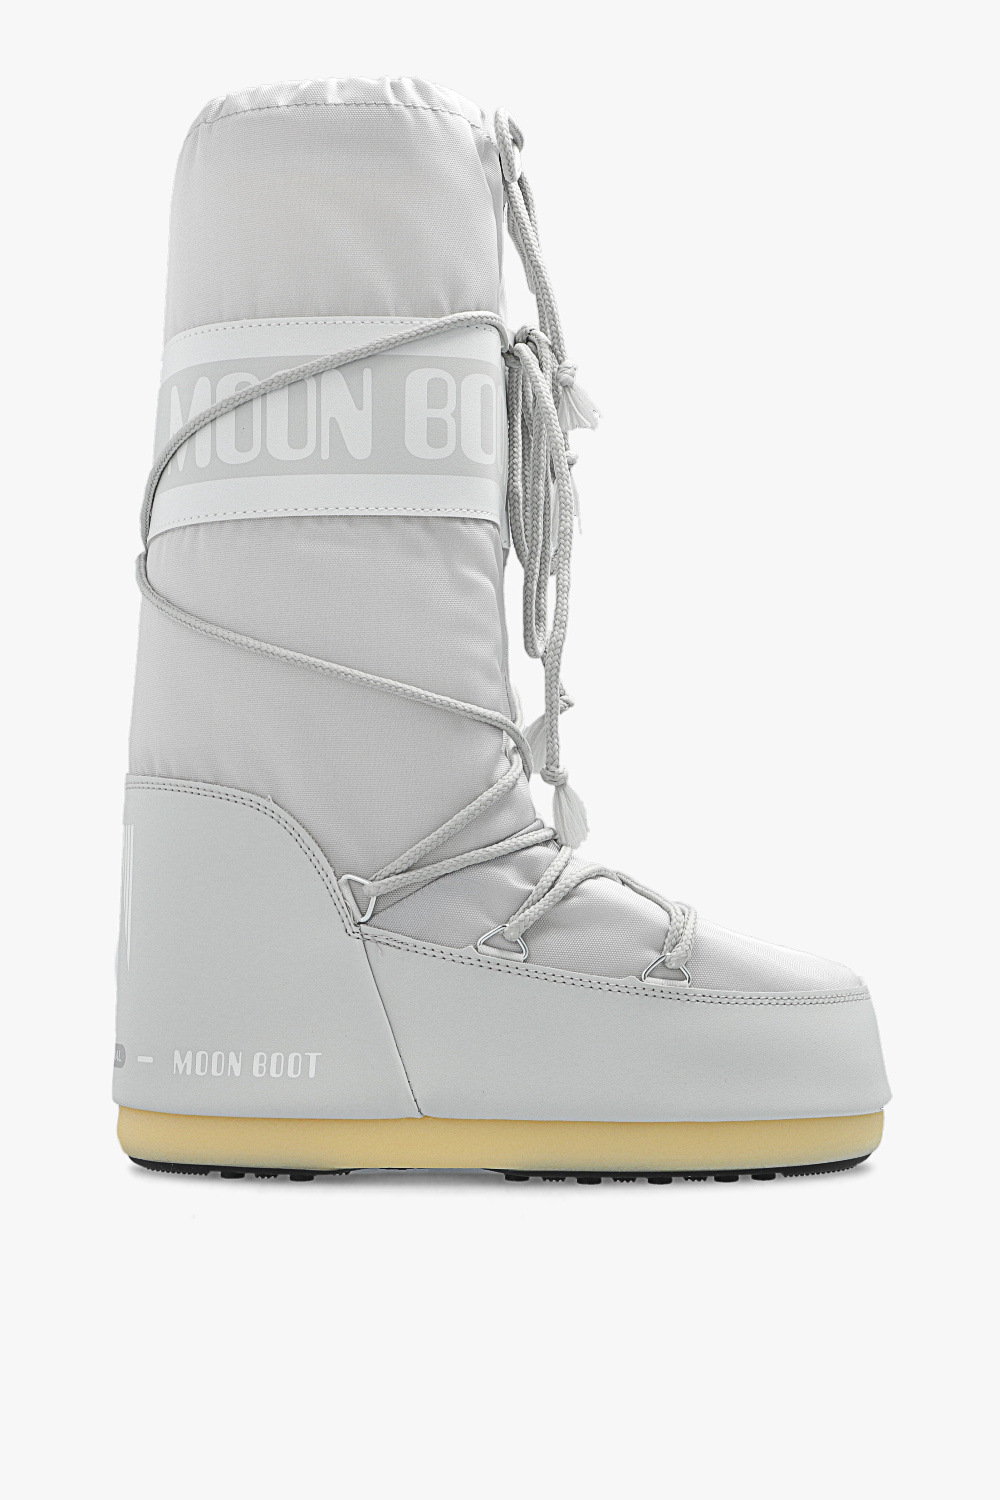 rekenkundig Consulaat Cadeau Moon Boot 'Icon Nylon' snow boots | Le Silla Eva 120mm ankle boots Schwarz  | StclaircomoShops | Women's Shoes